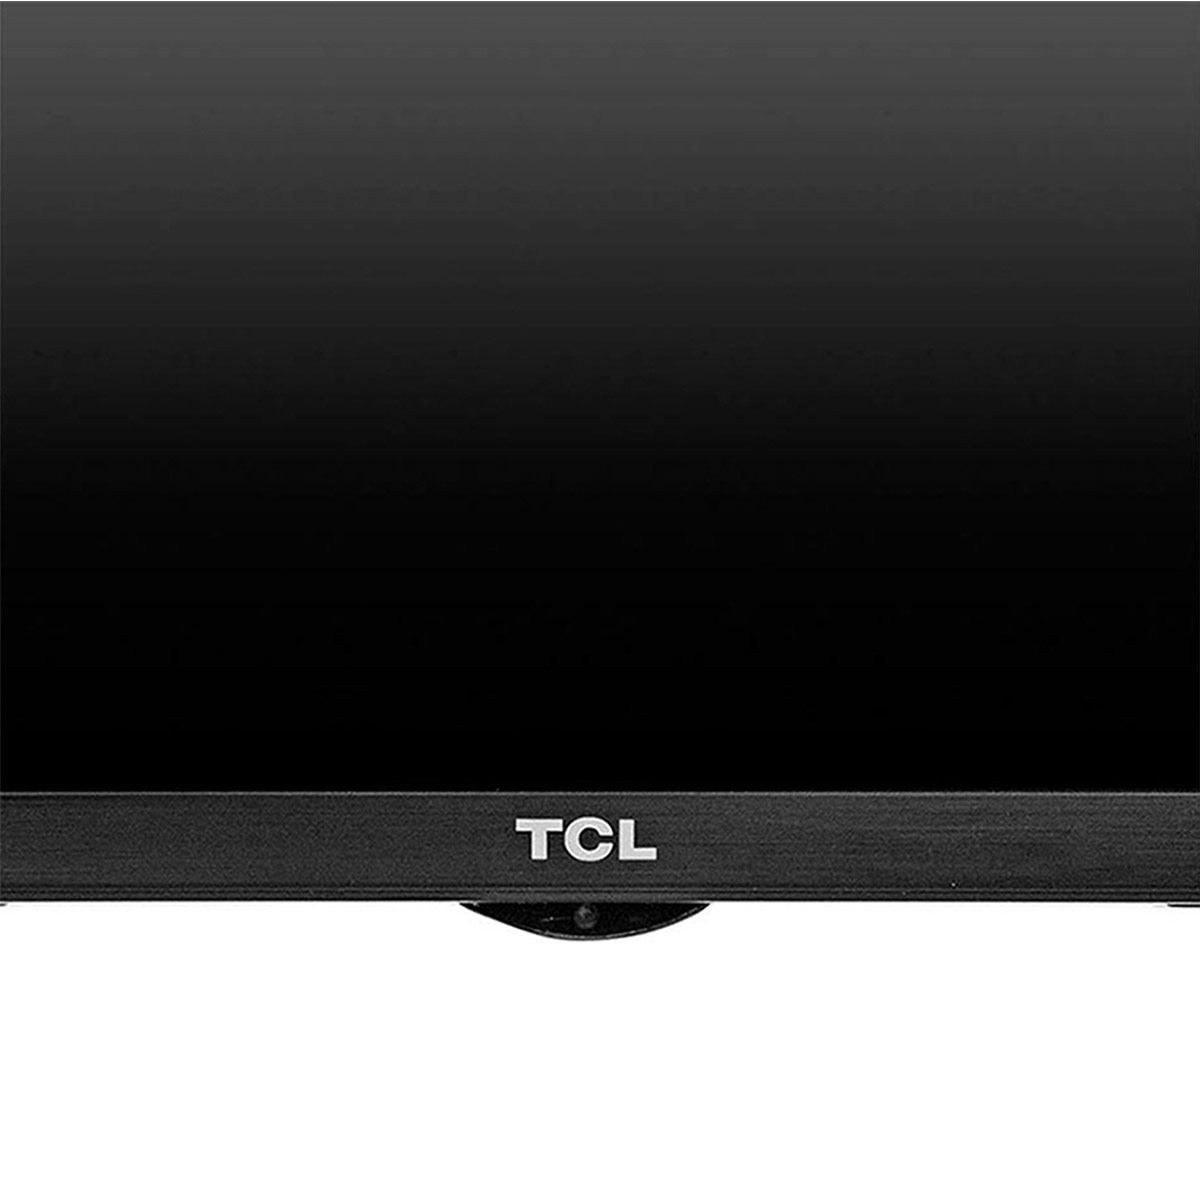 Pantalla TCL 40 pulgadas FHD Android Tv 40a345